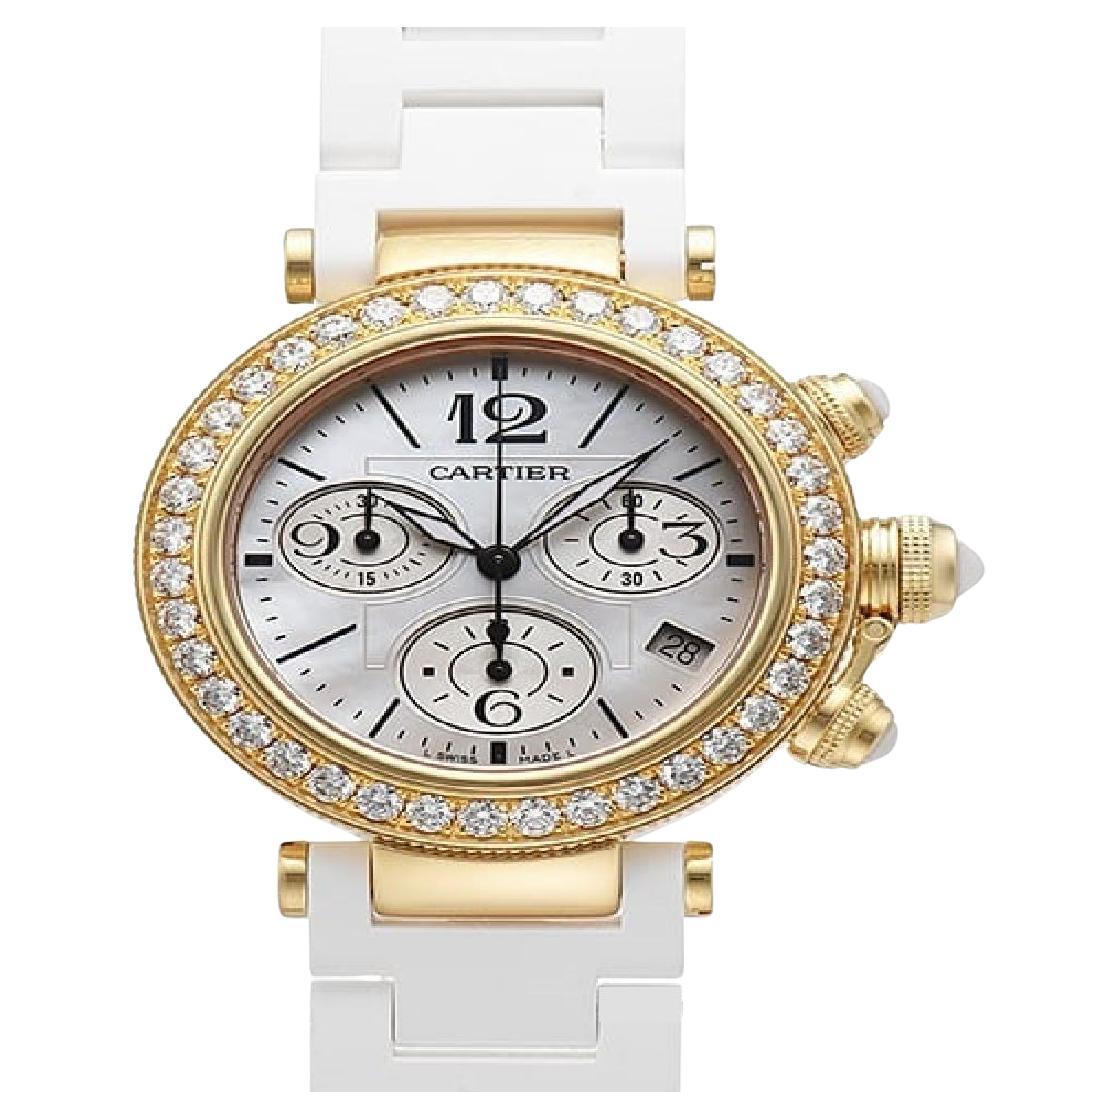 Cartier Pasha Seatimer Chronograph WJ130009 - Elegant Women's Diamond Watch